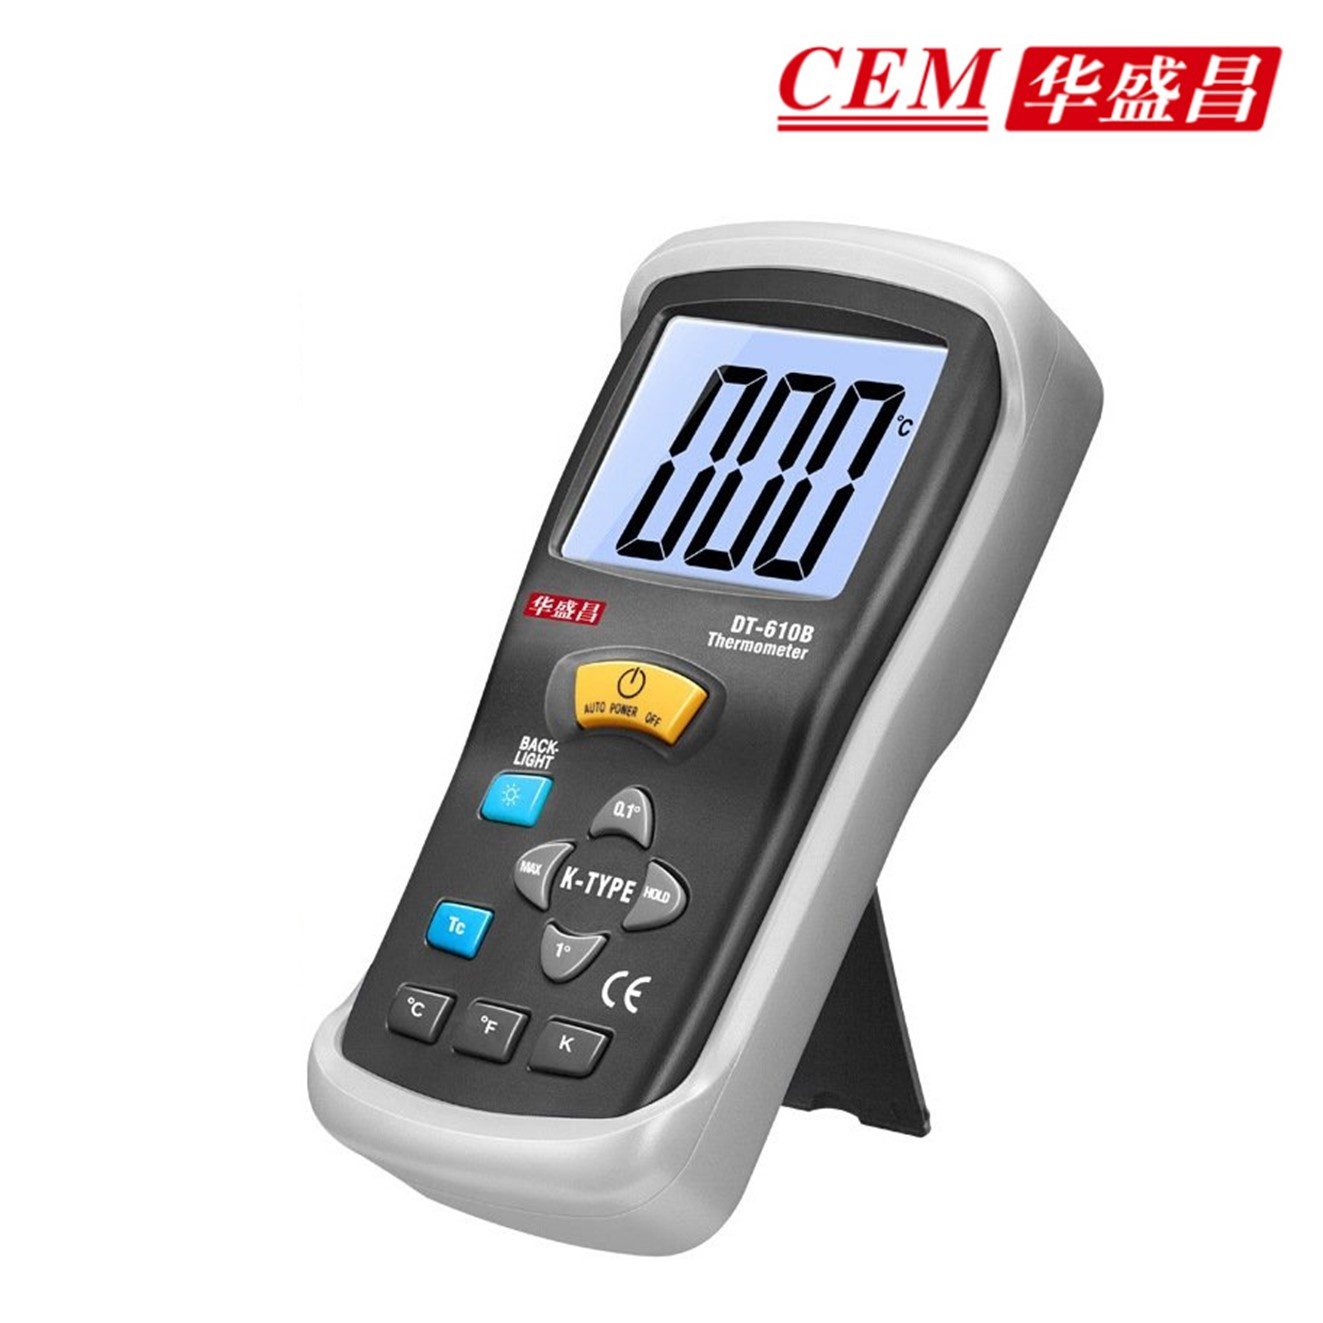 CEM DT-610B เครื่องวัดอุณหภูมิแบบมือถือ Digital Thermometers are portable hand held  @ ราคา